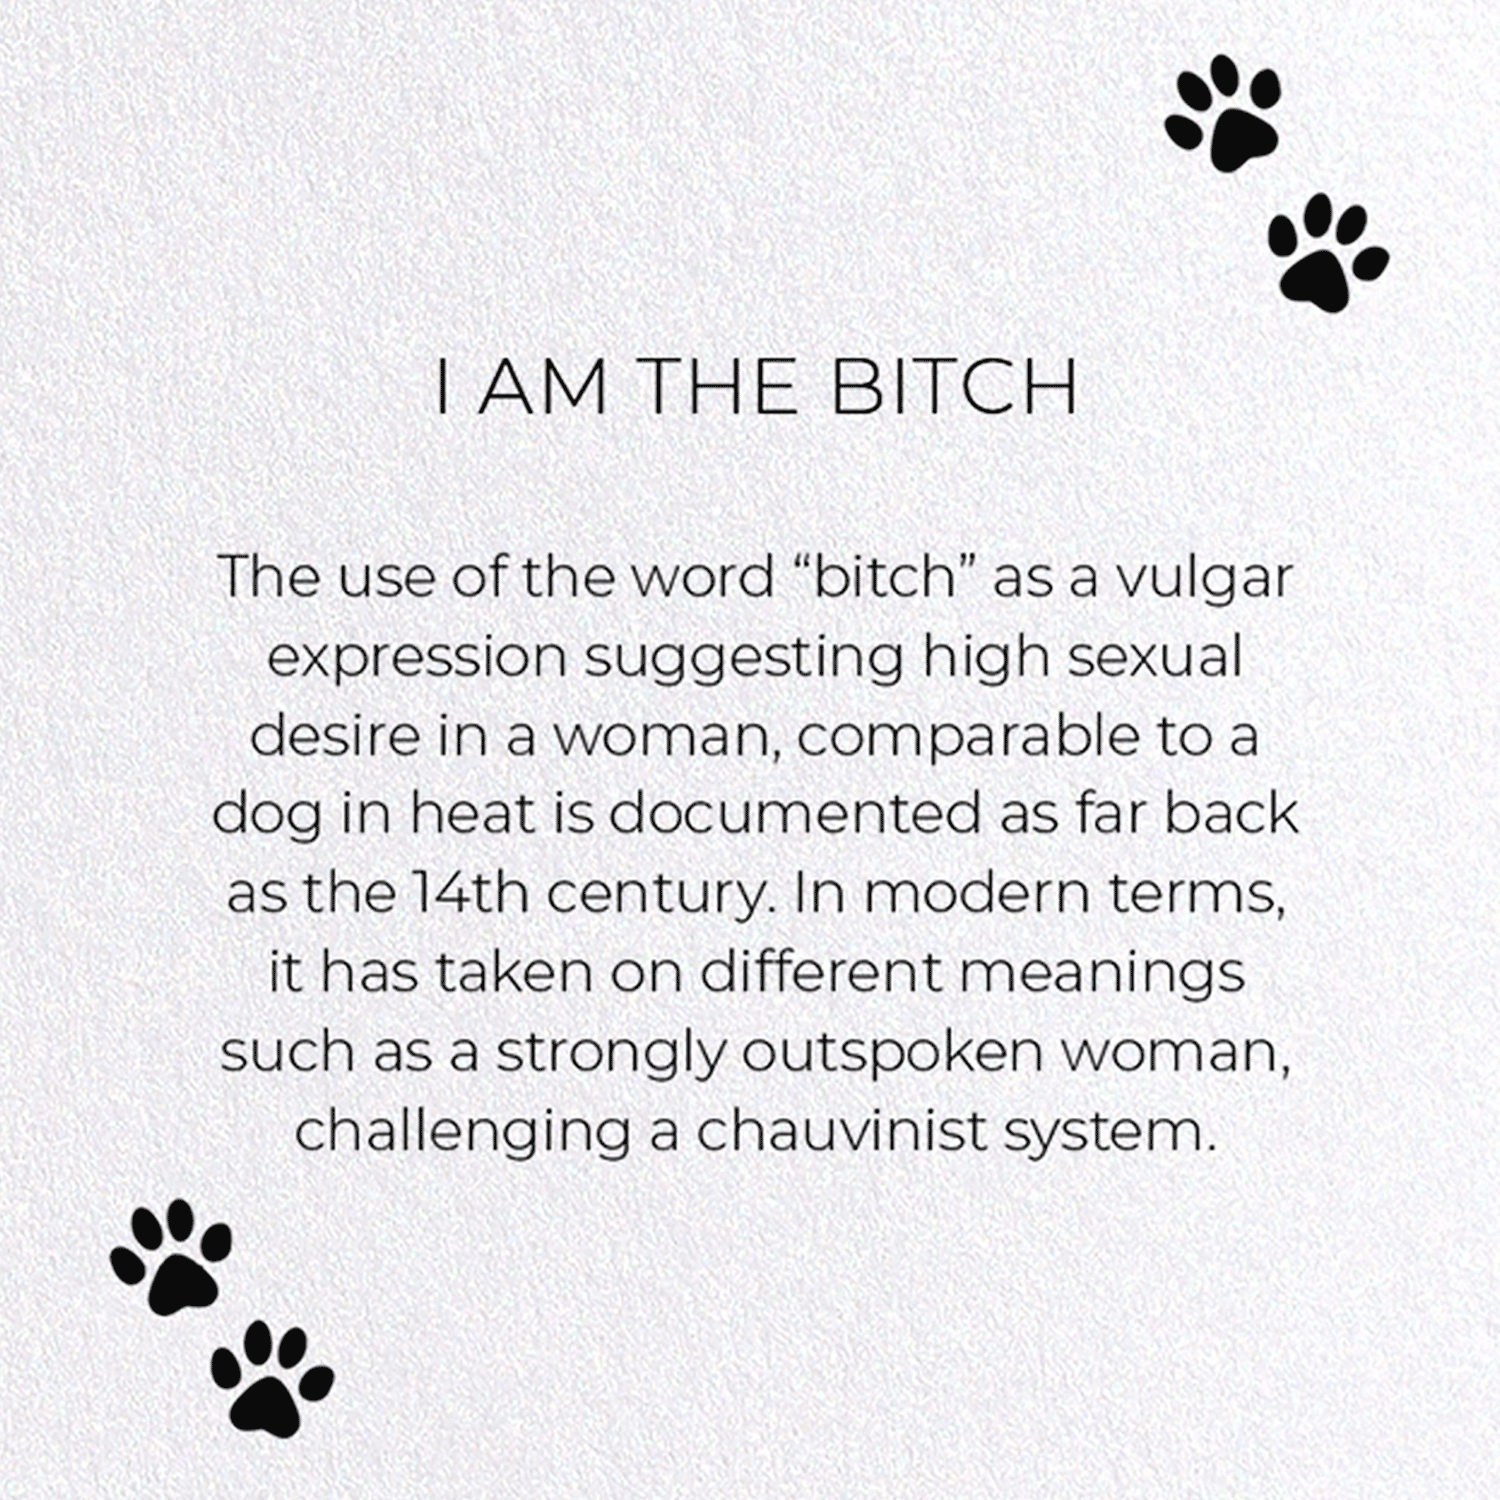 I AM THE BITCH